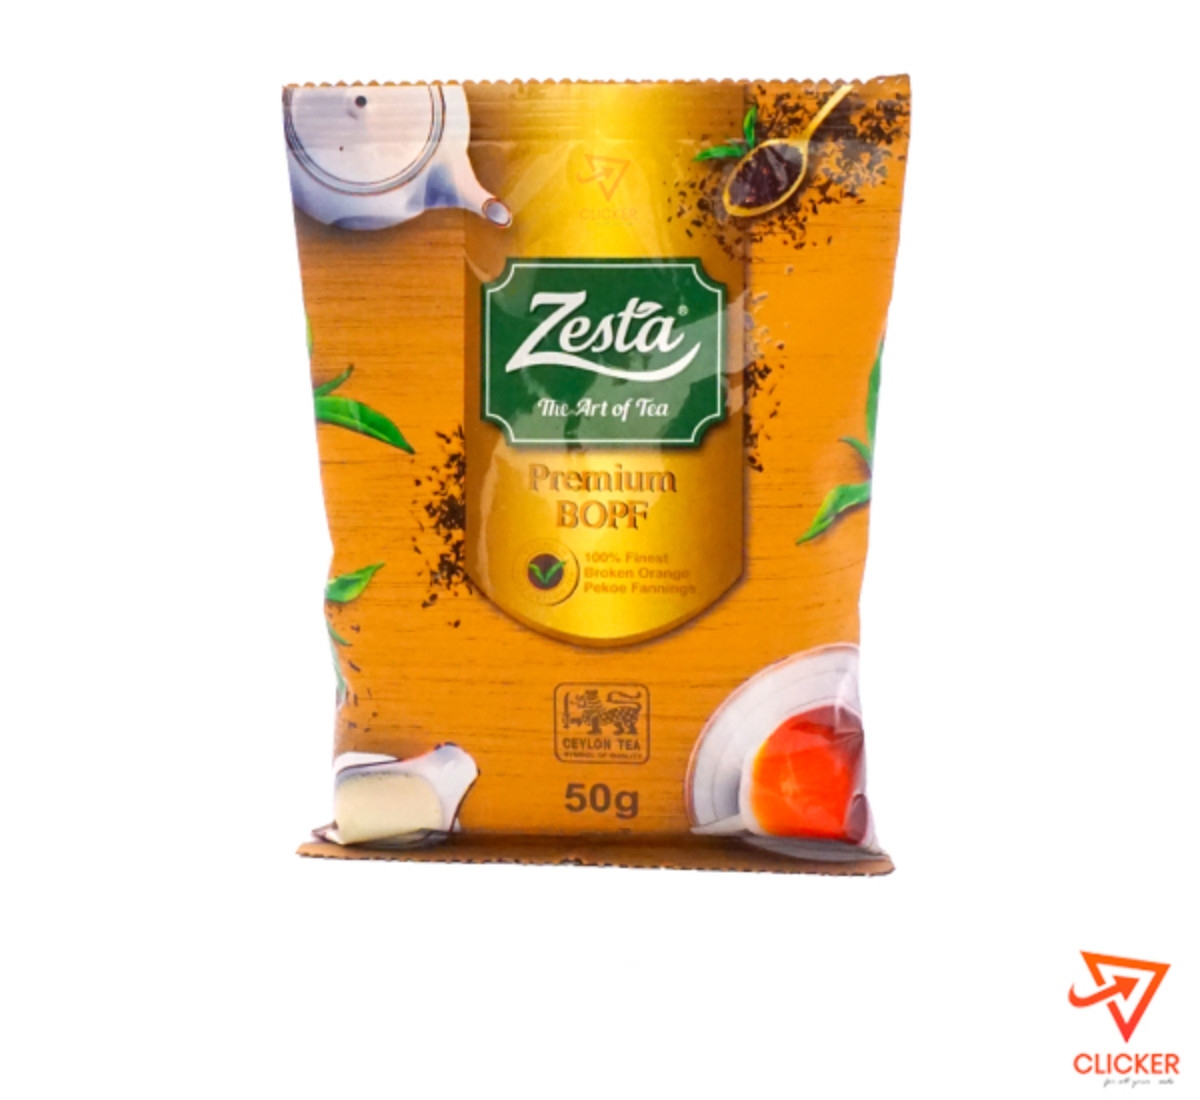 Clicker product 50g ZESTA Tea 909